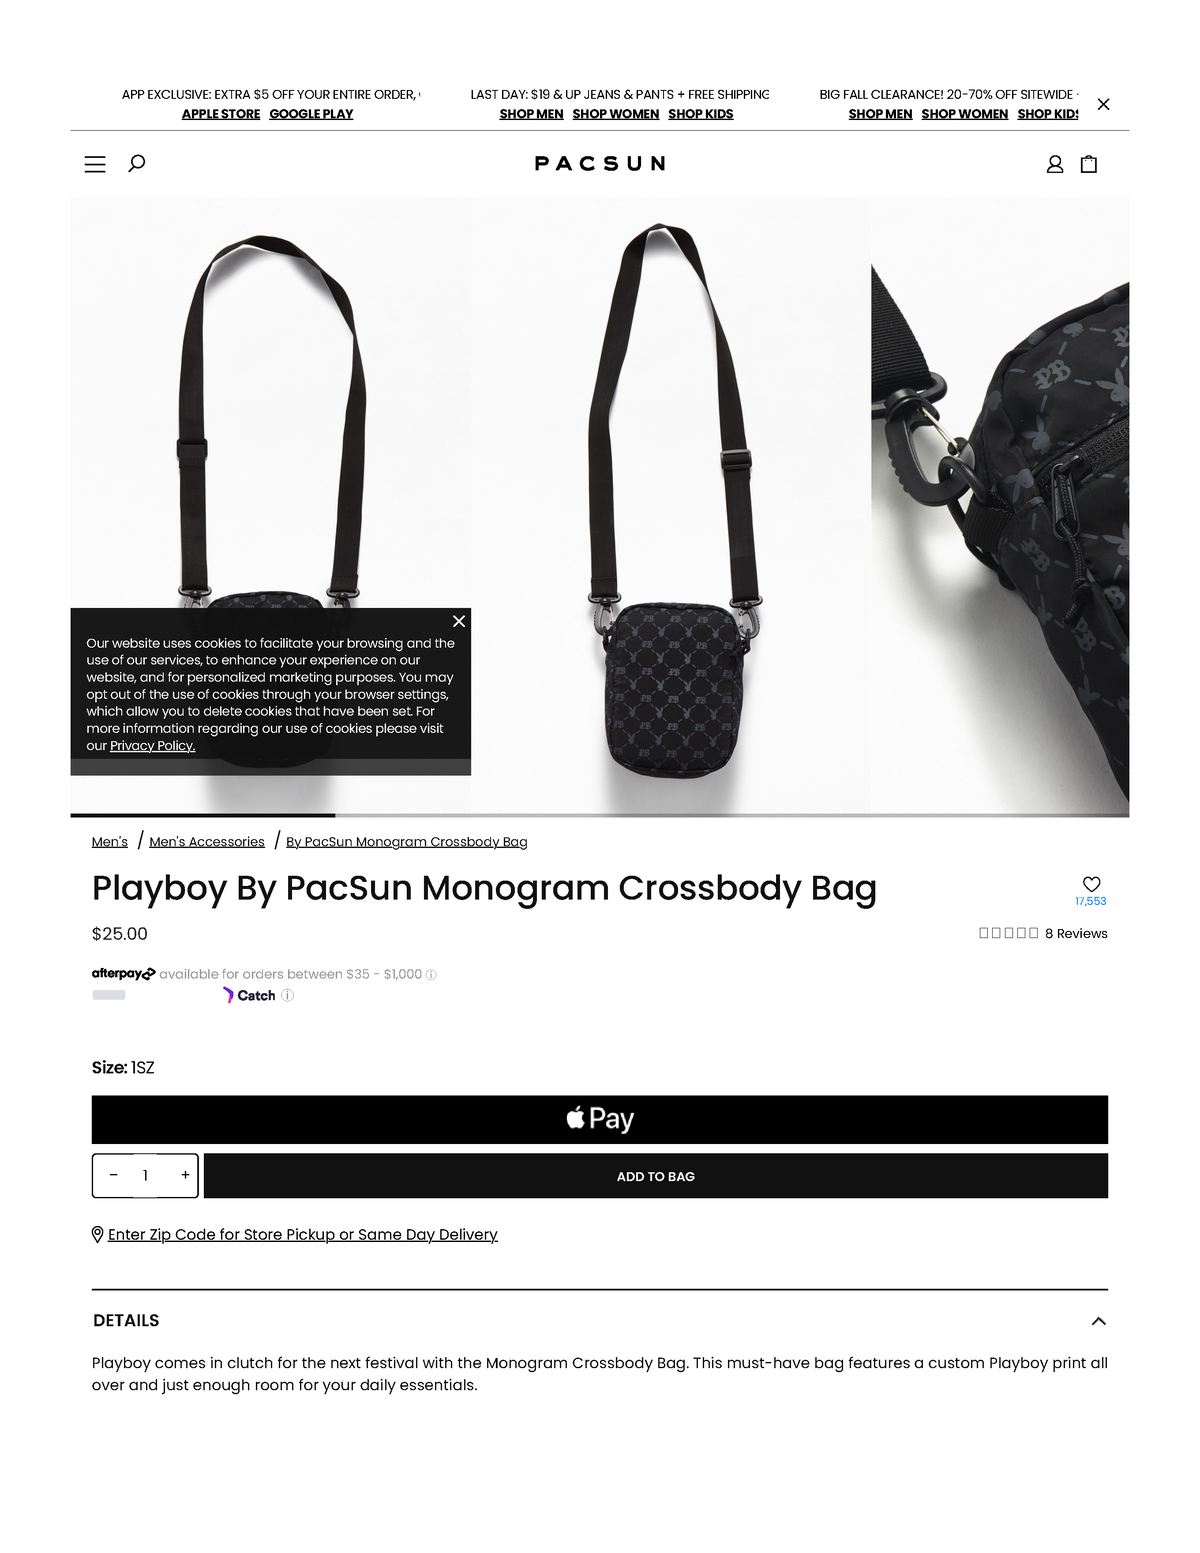 Playboy By PacSun Monogram Crossbody Bag